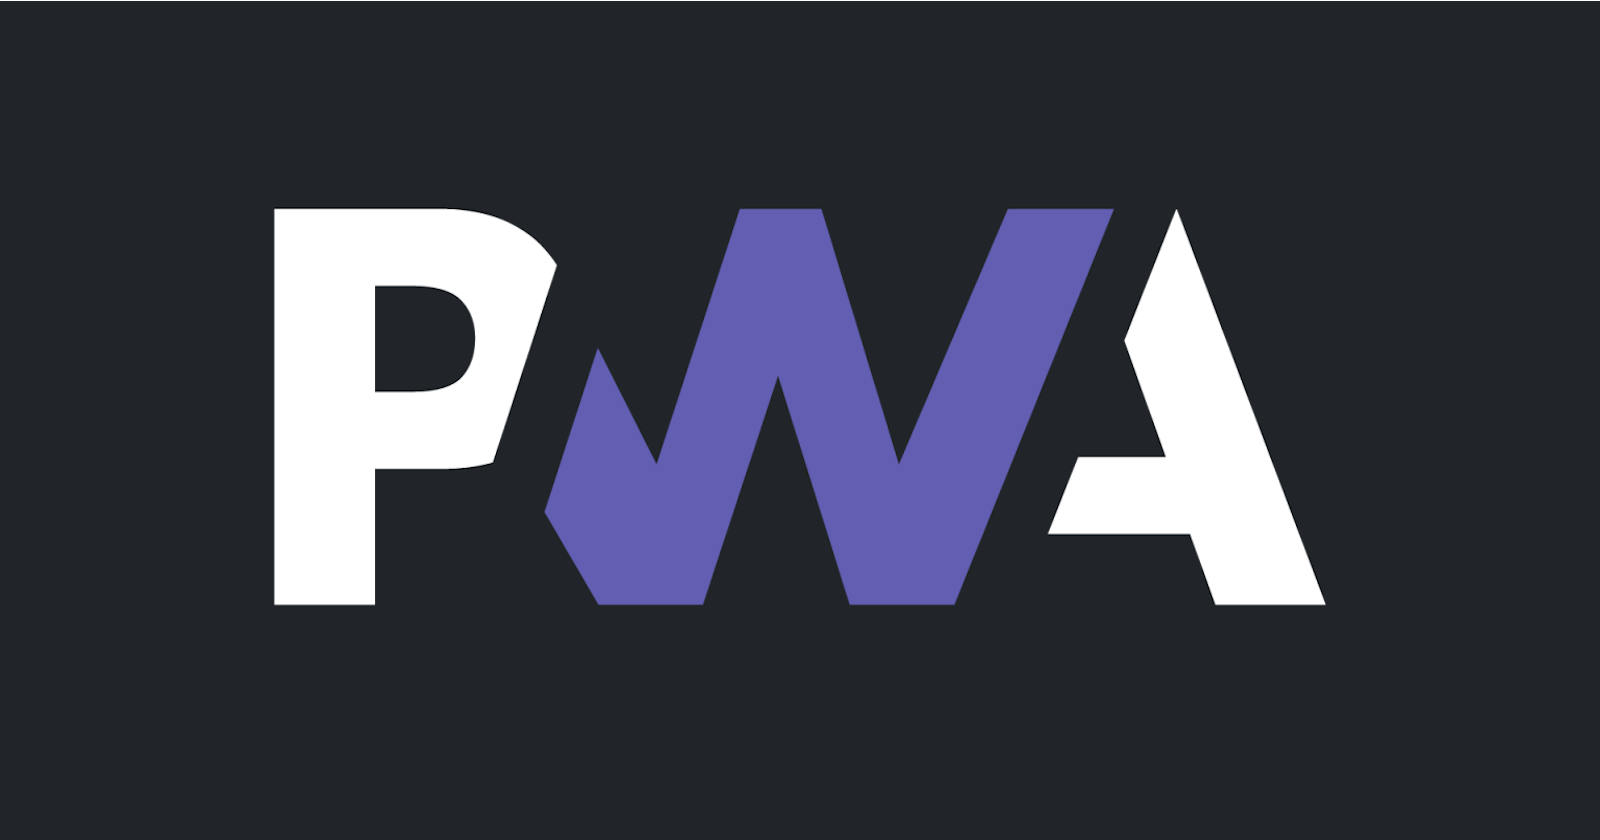 Convert Django website to PWA